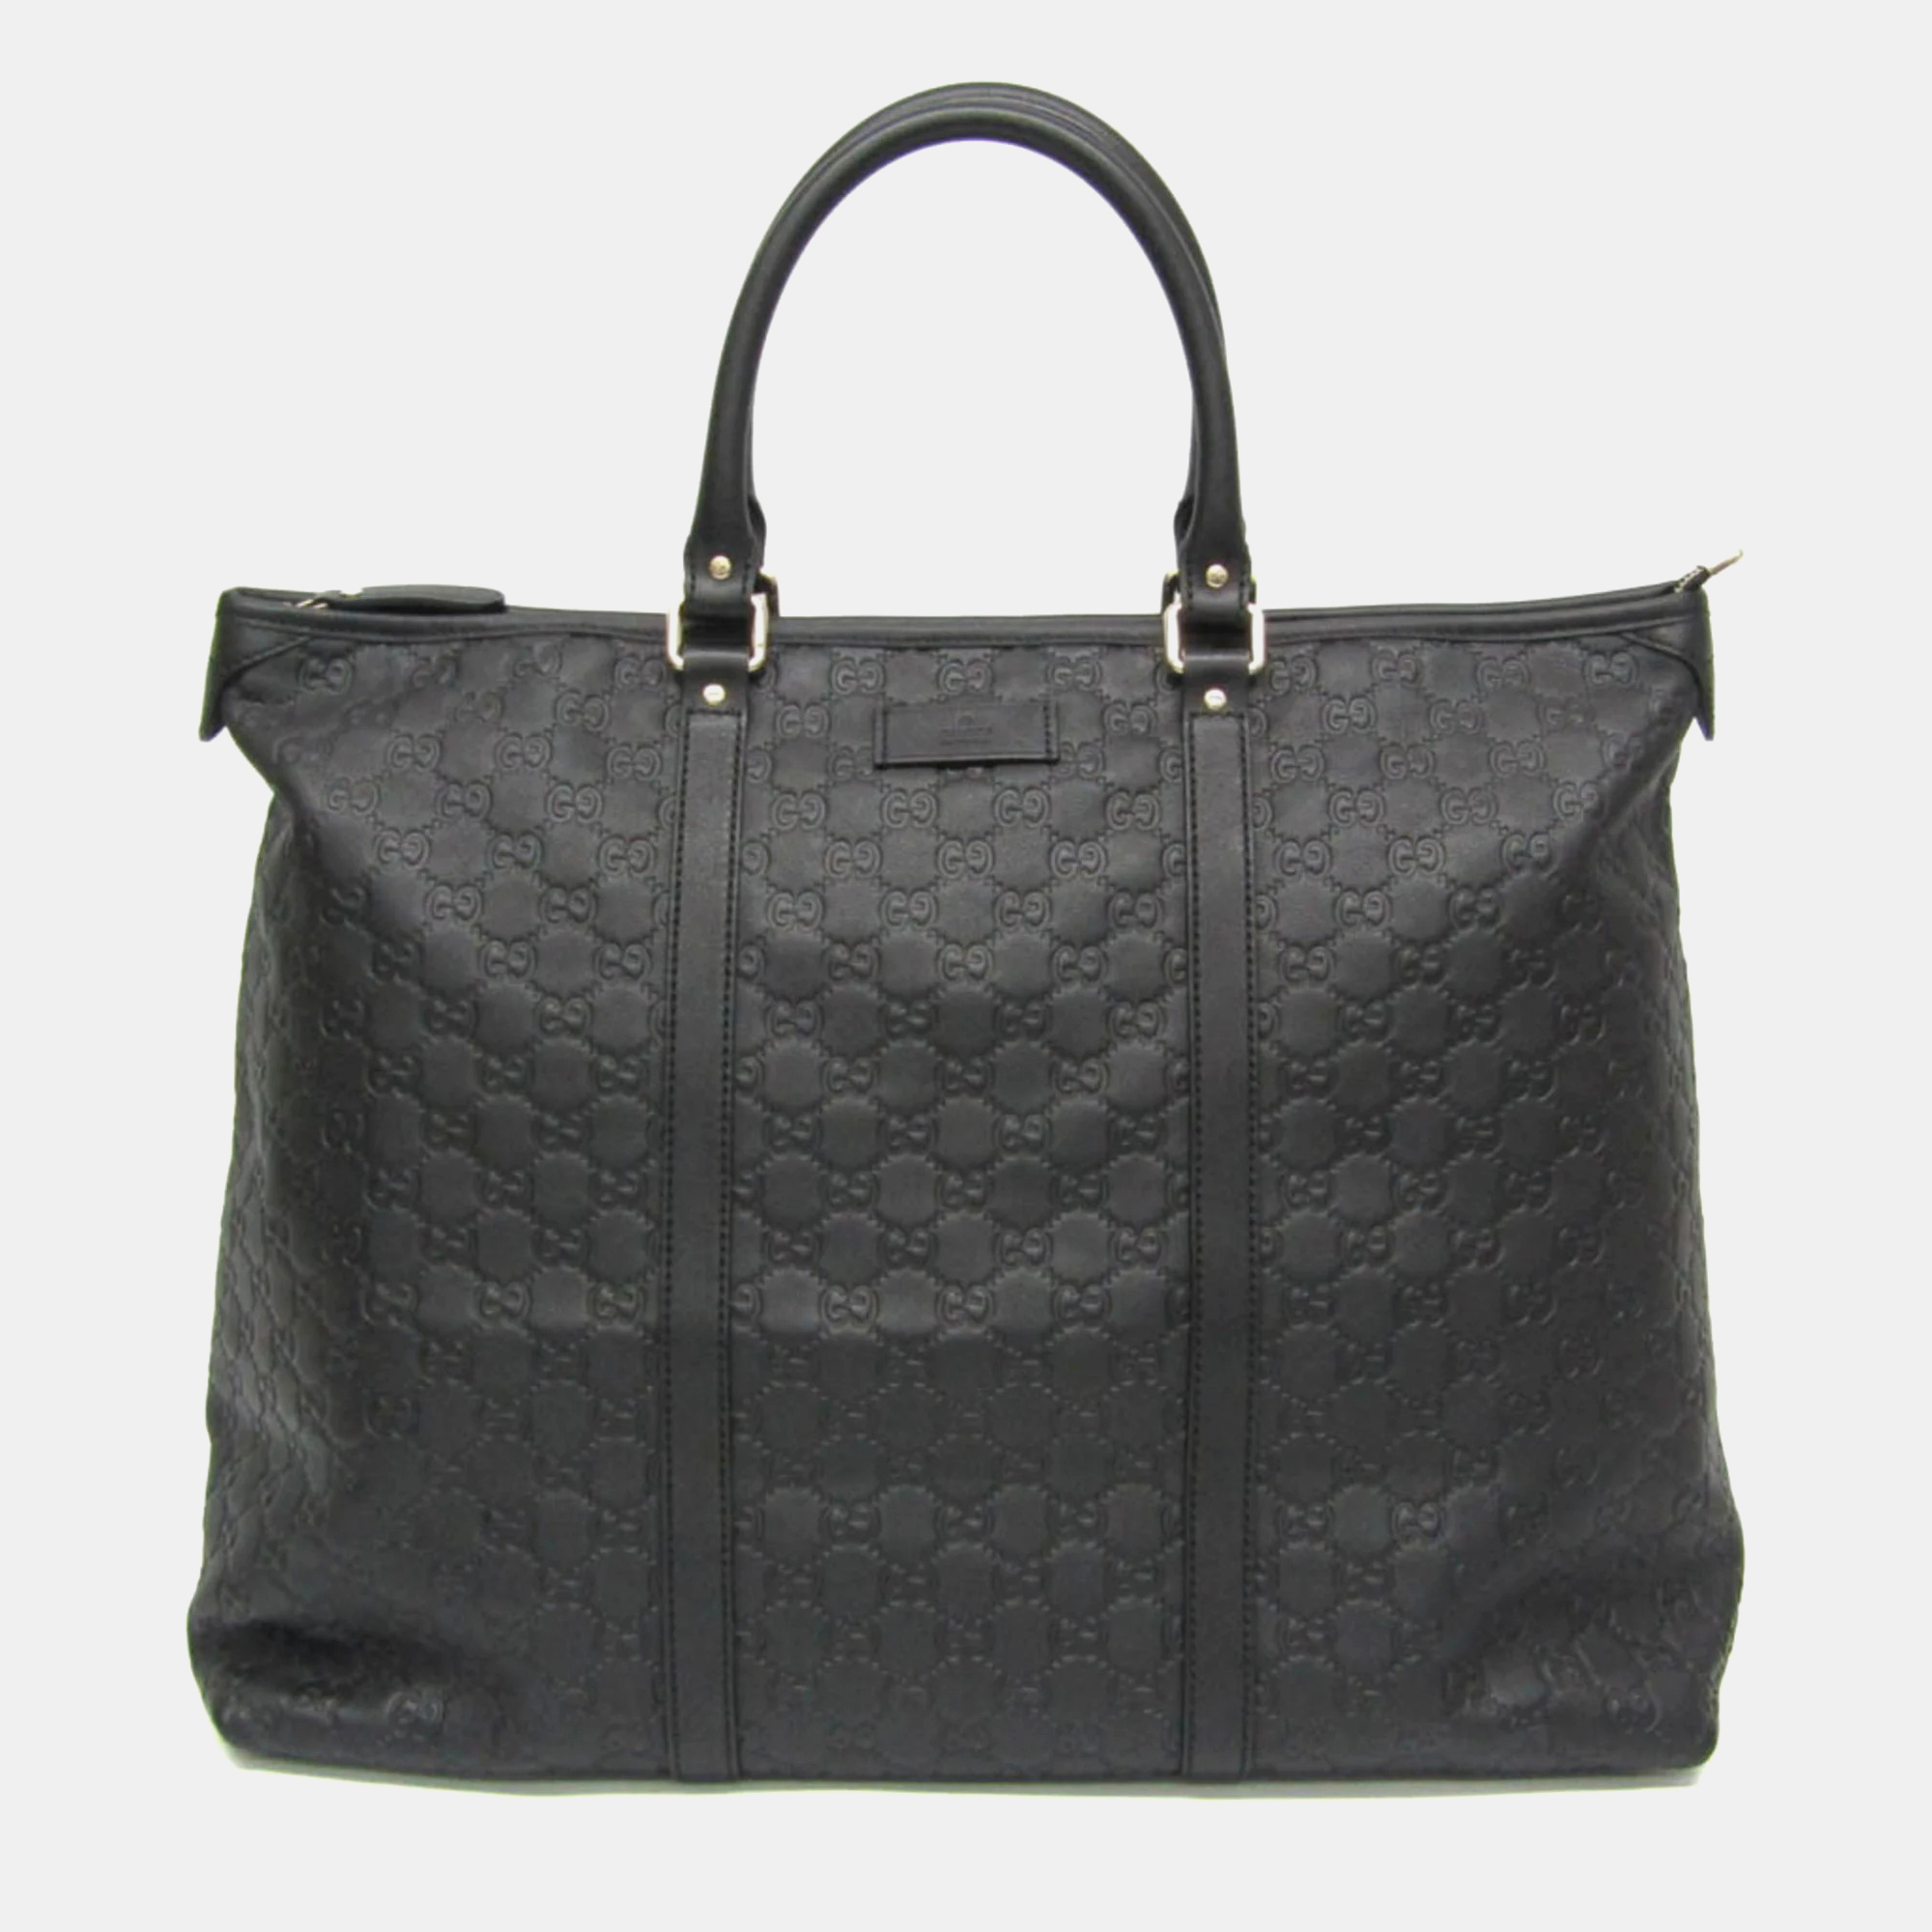 Gucci black leather microguccissima large tote bag